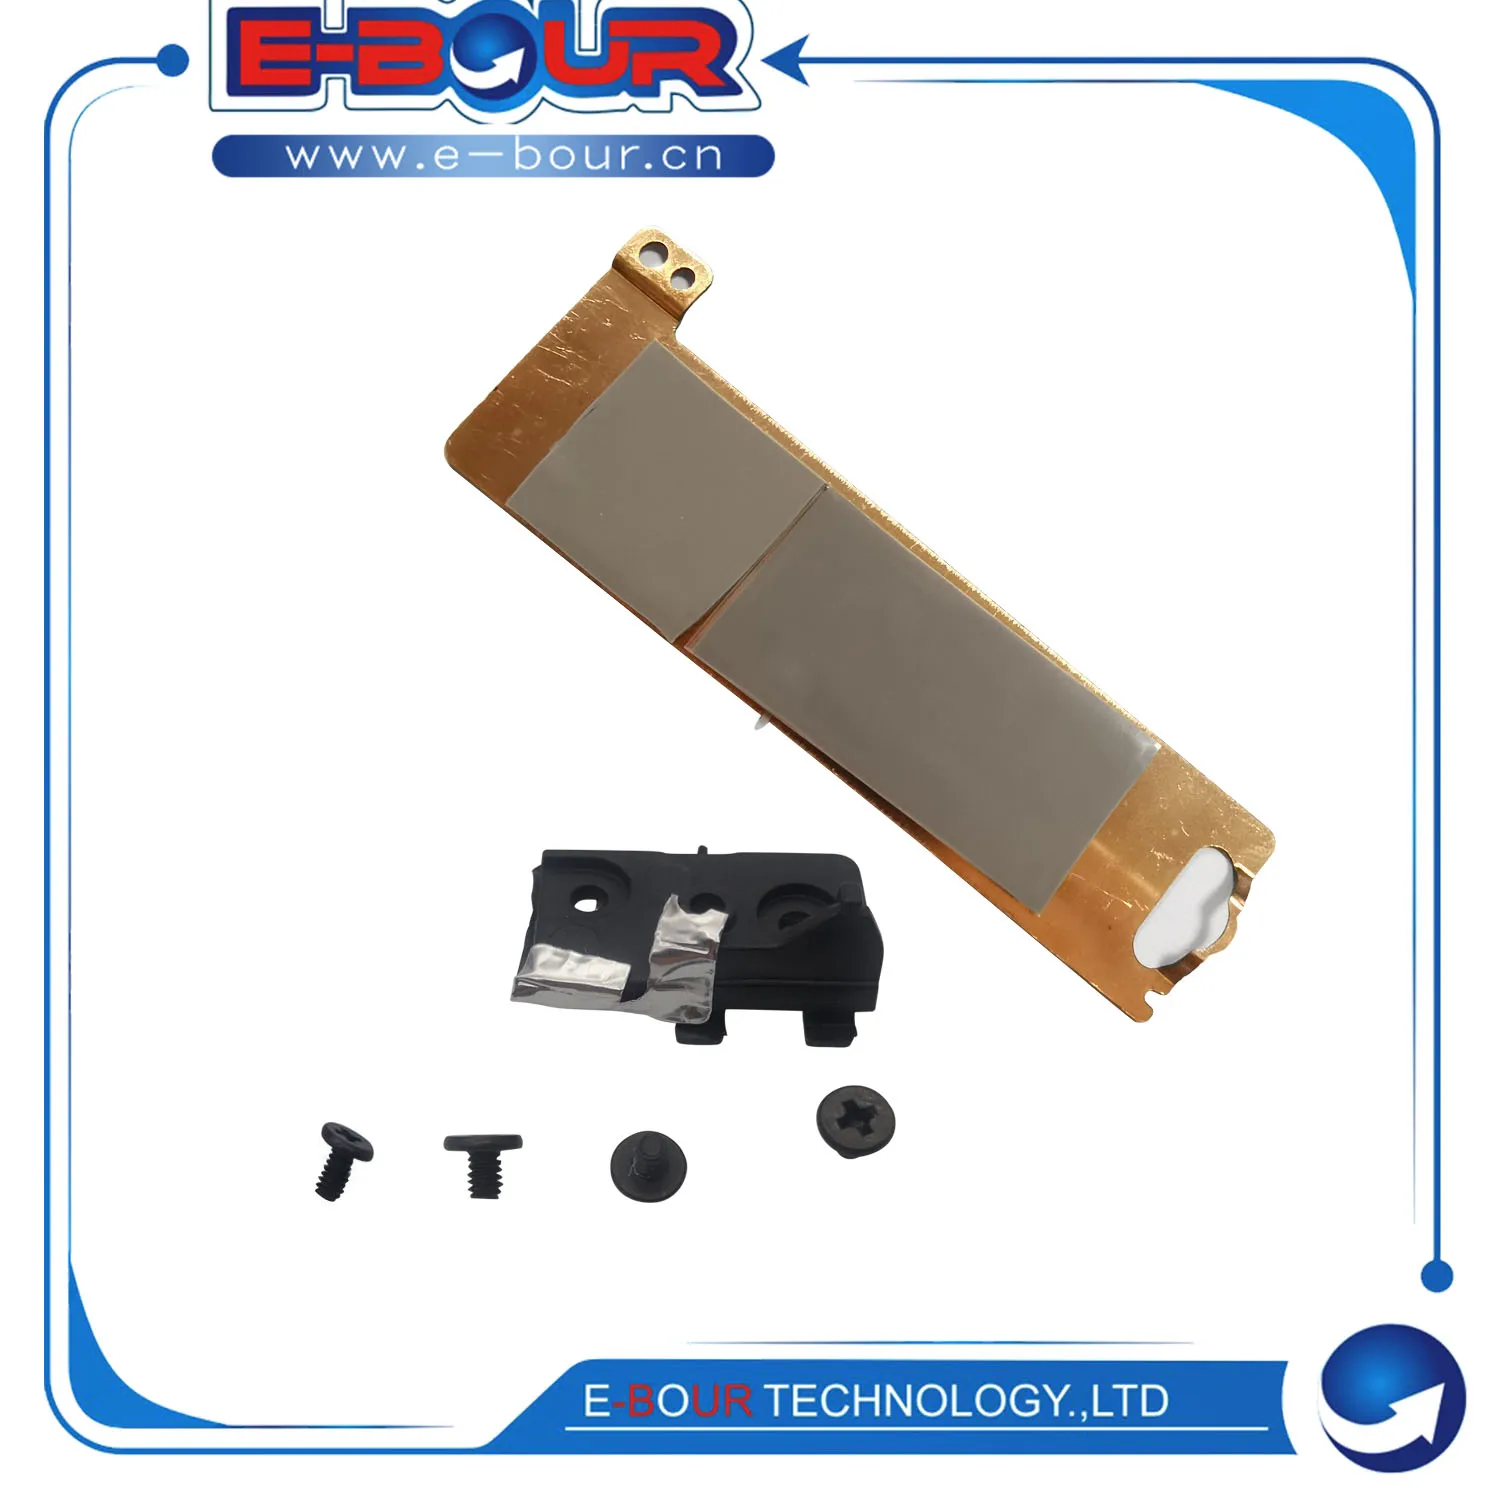 

M.2 SSD Heatsink Hard Drive Cover Thermal Heat Shield Bracket for E5480 E5488 E5590 E5591 E5580 E5490 E5491 E5280